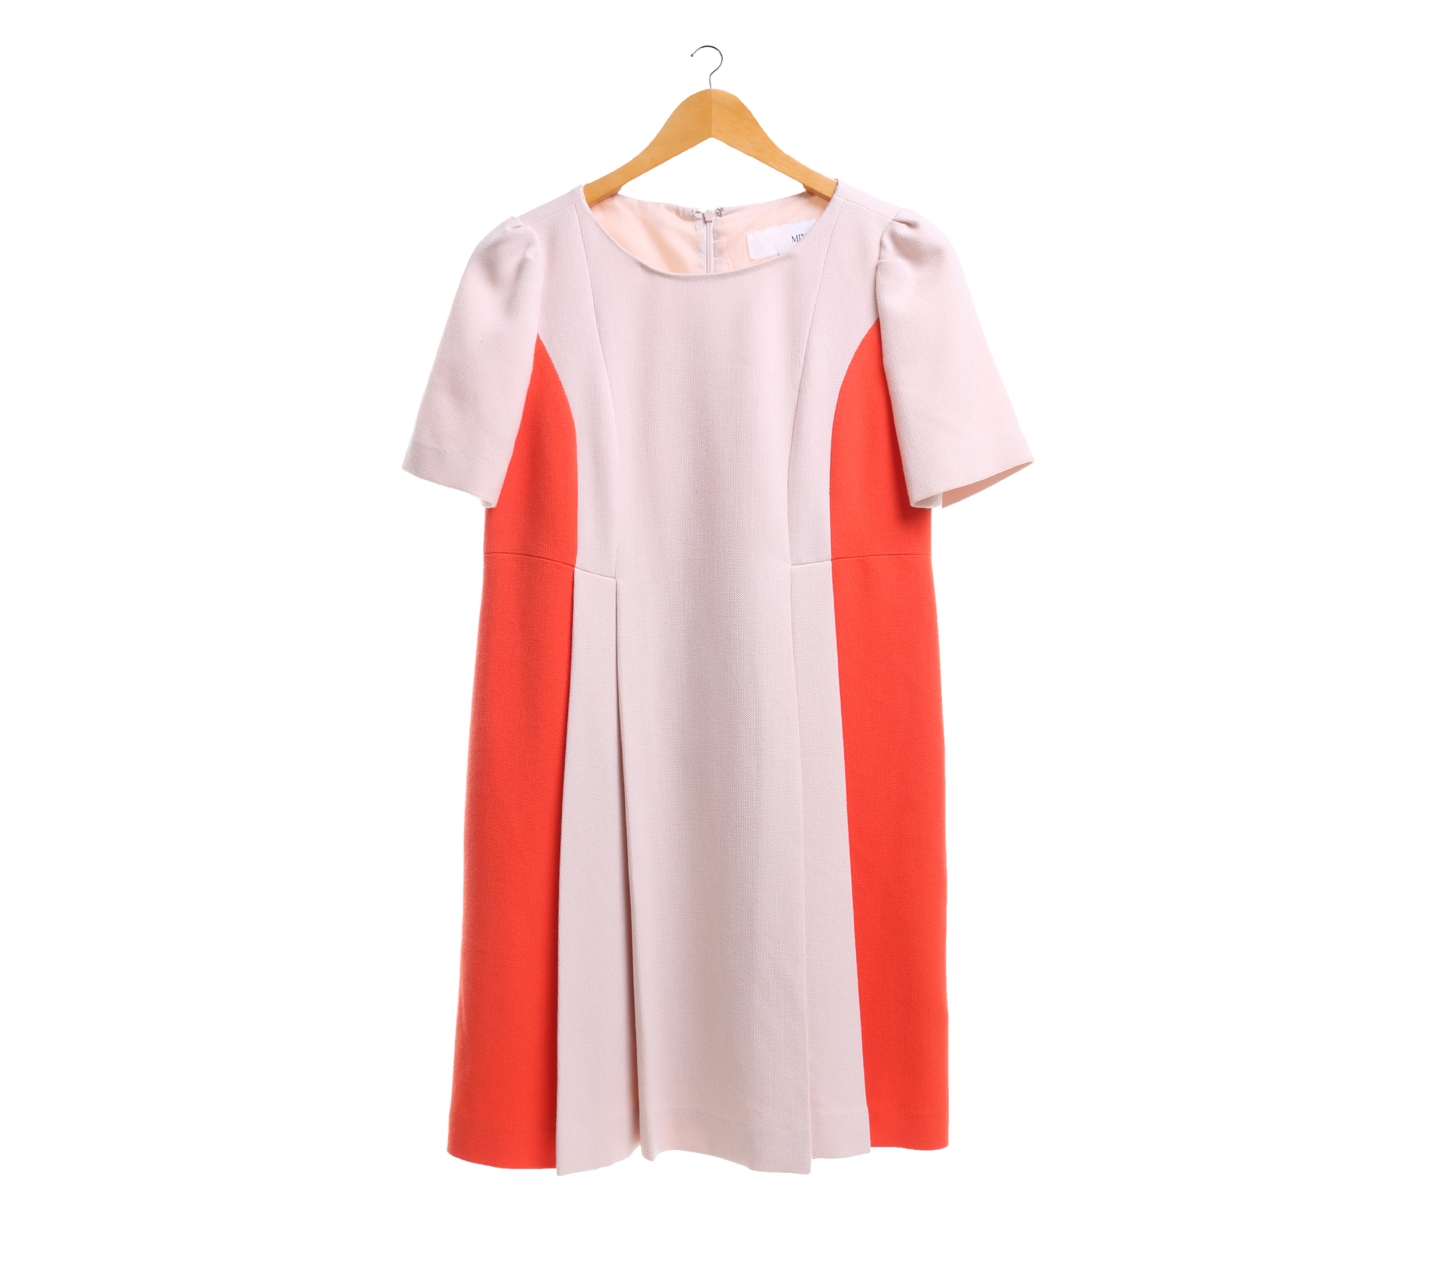 Mixxo Light Brown And Orange Mini Dress